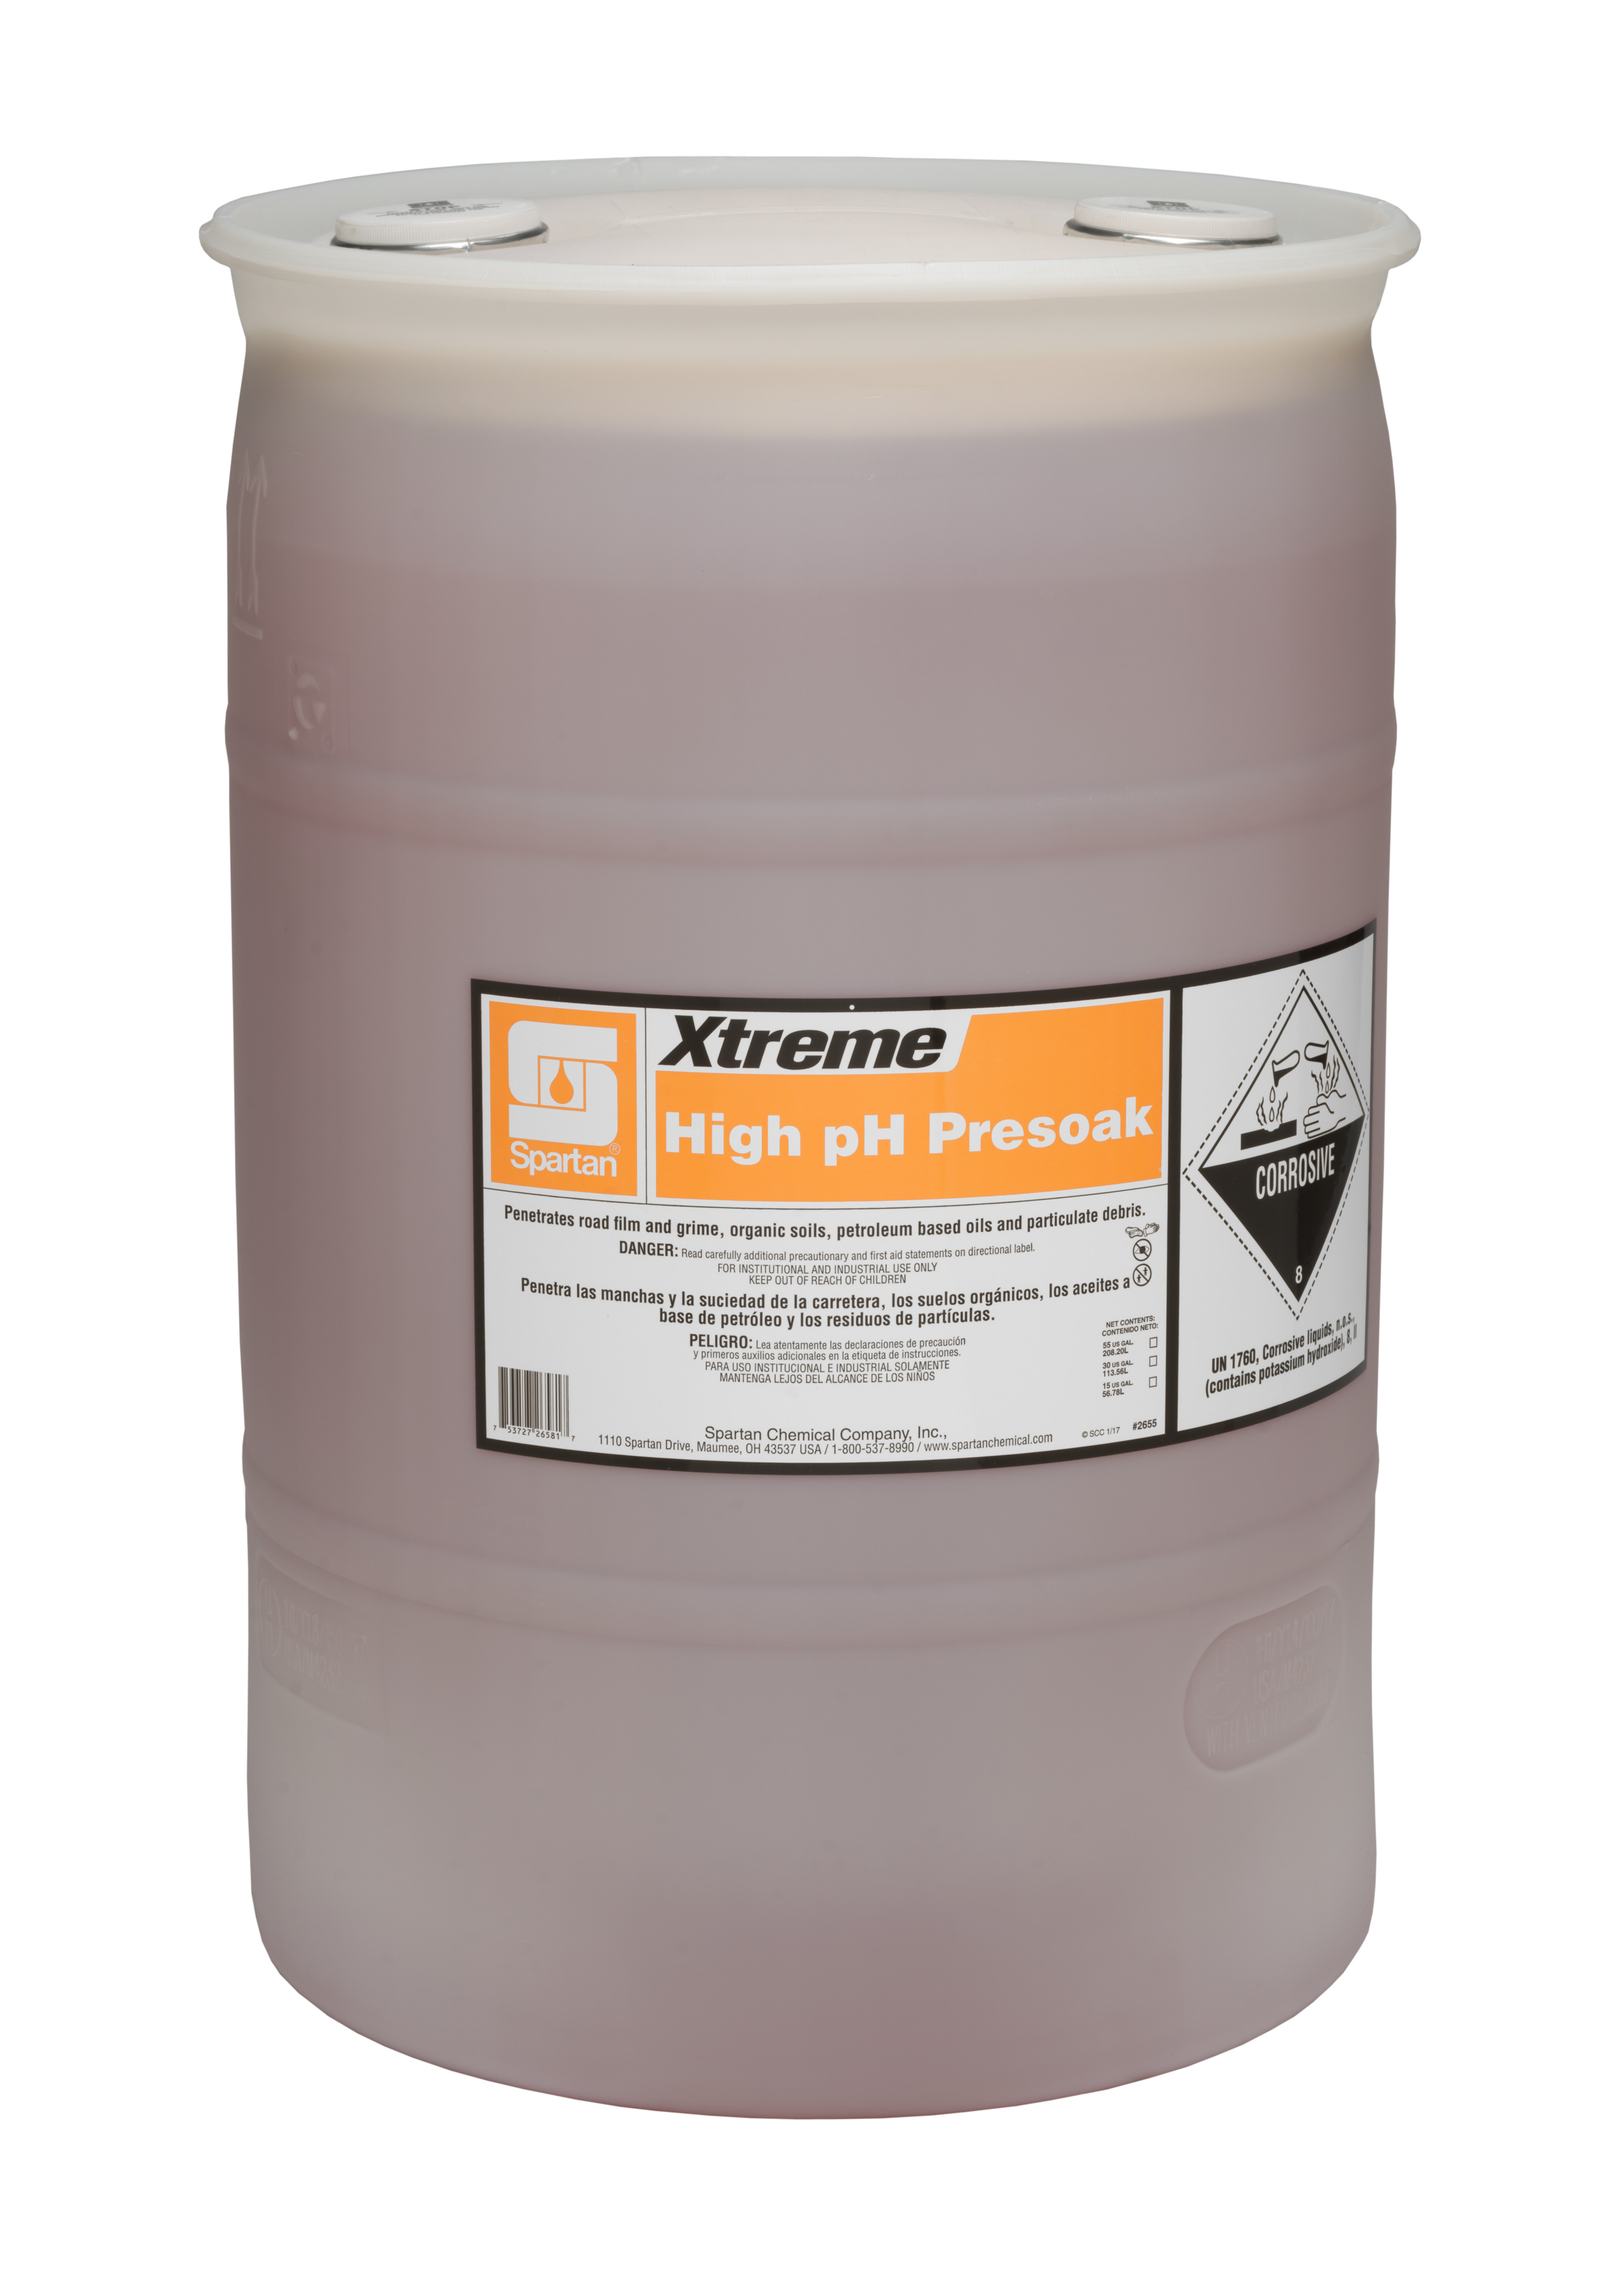 Spartan Chemical Company Xtreme High pH Presoak, 30 GAL DRUM